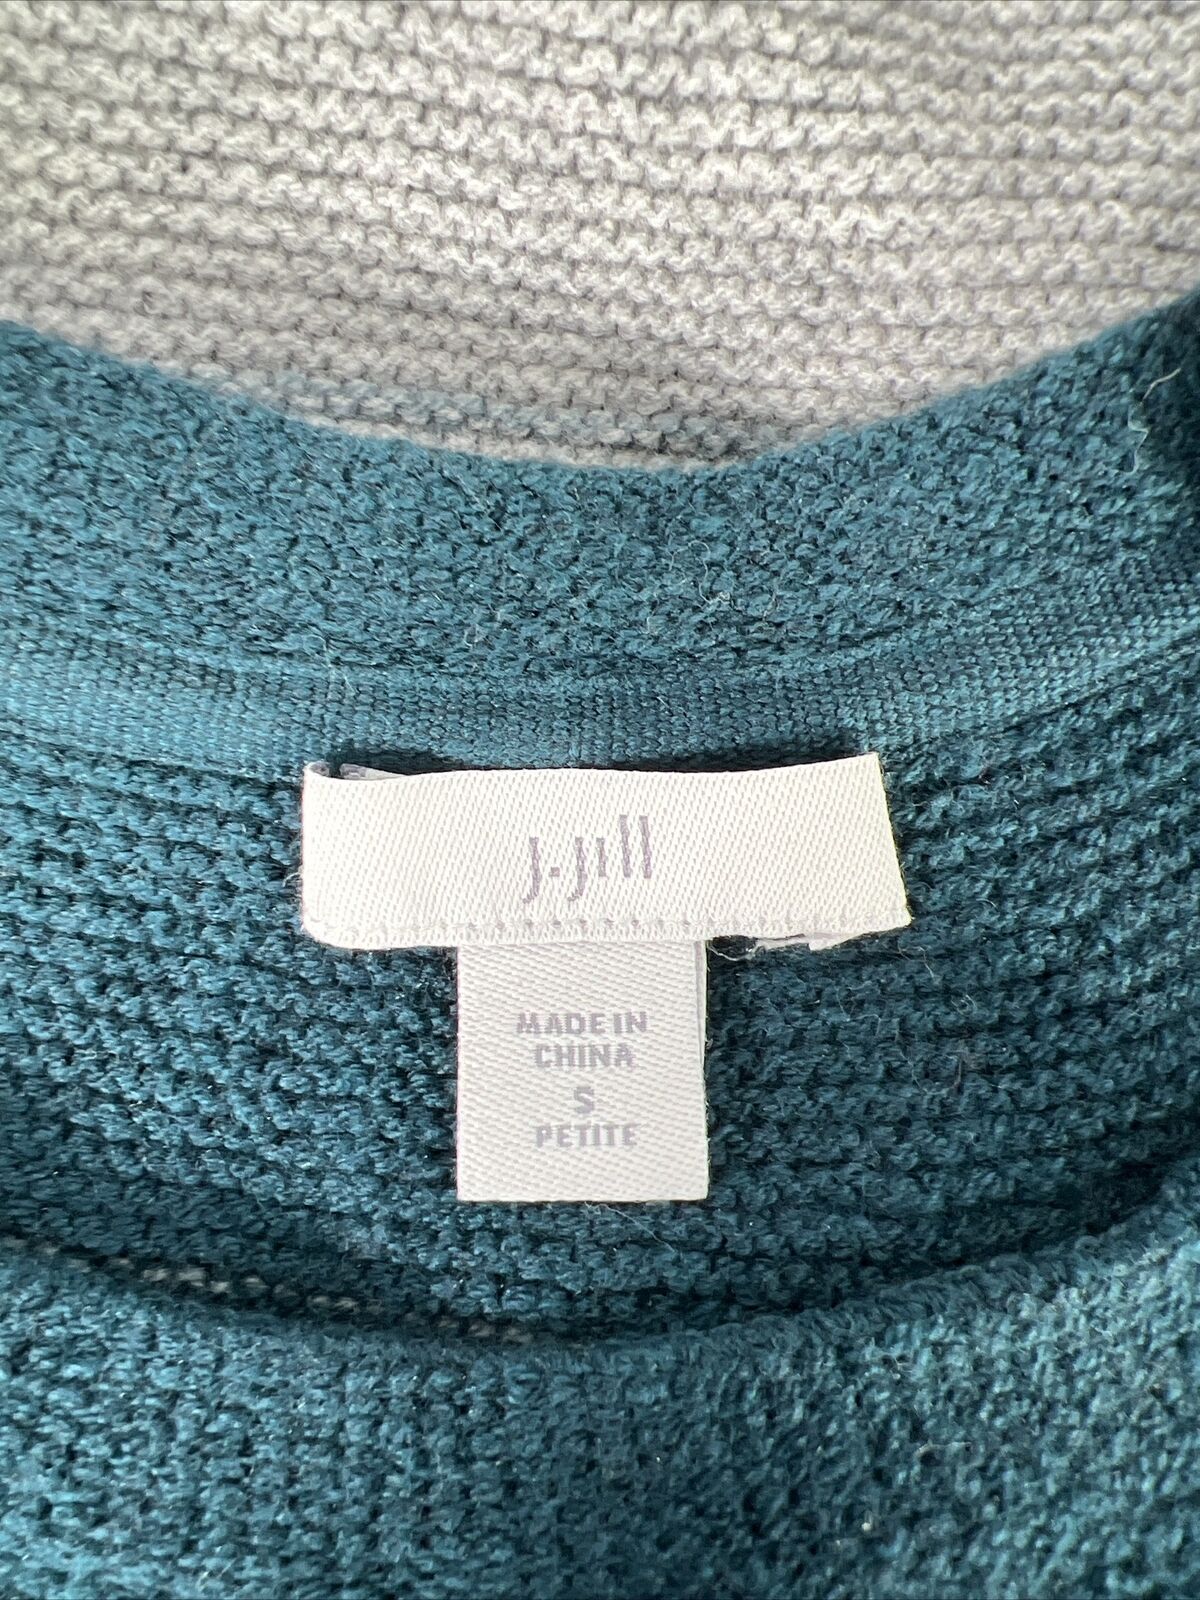 J. Jill Women's Blue Ombre Long Sleeve Crewneck Knit Sweater - Petite S